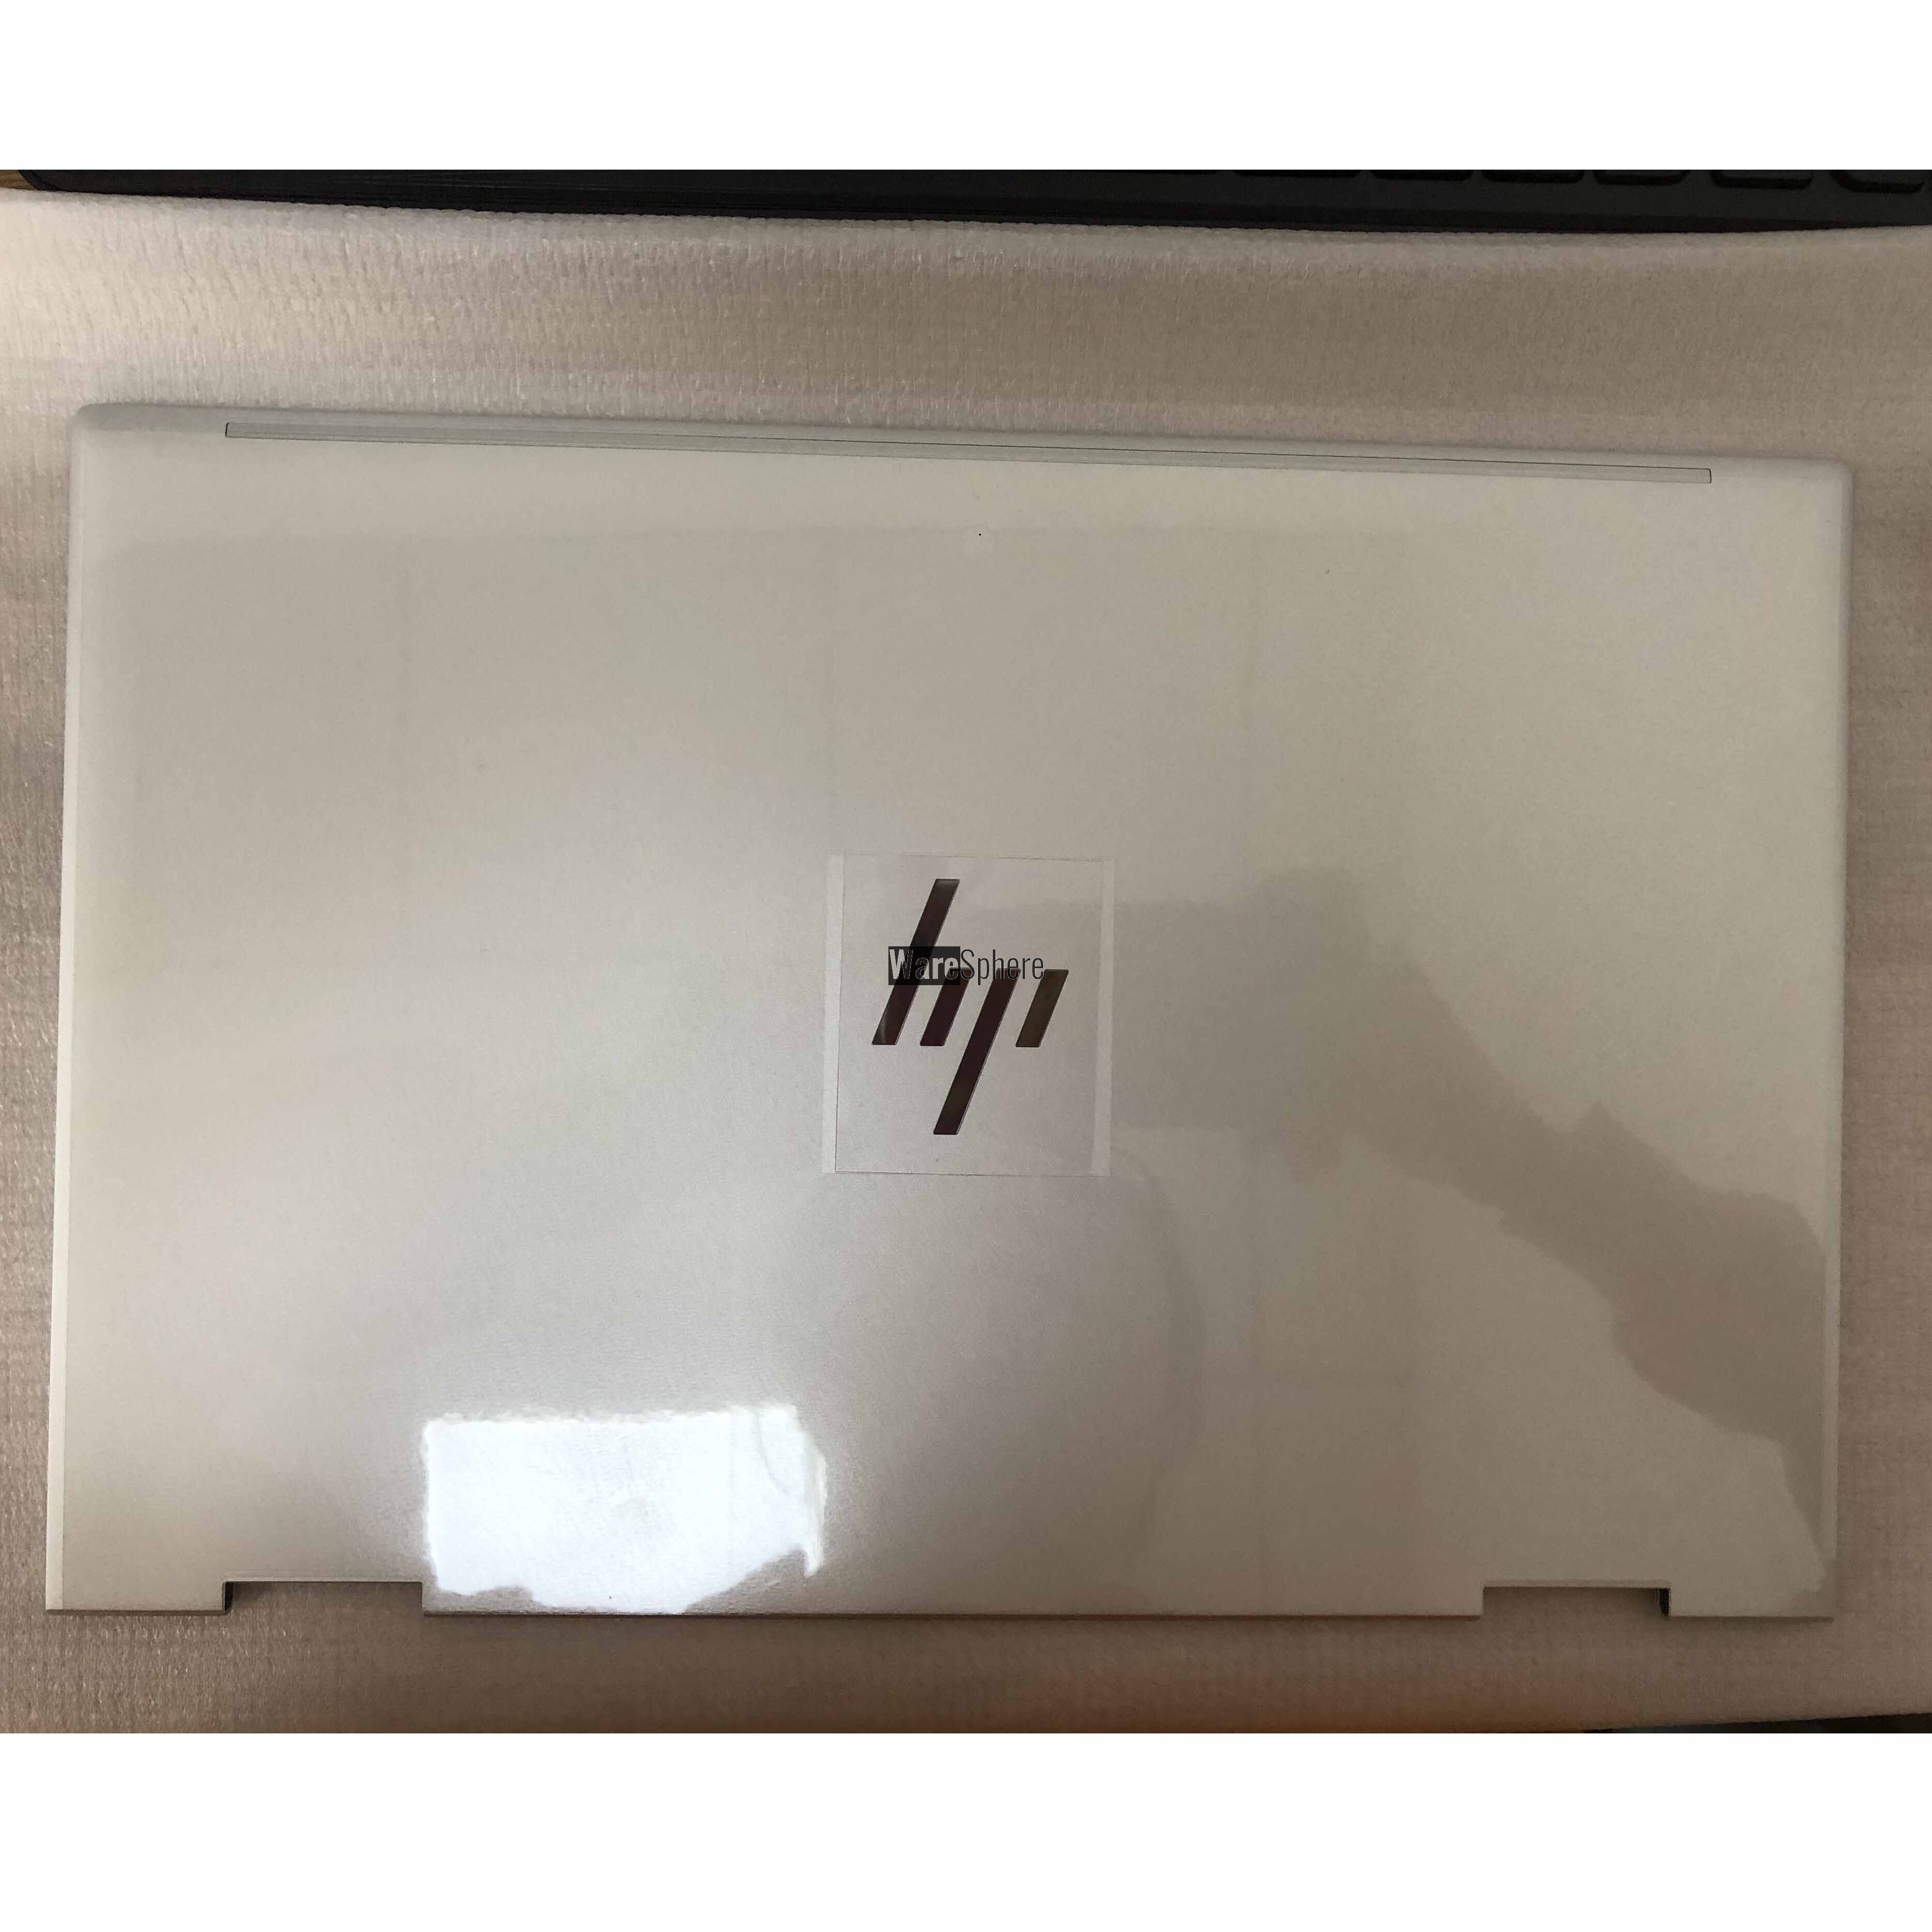 LCD Back Cover for HP EliteBook X360 830 G7 6070B1715902 THIN PVC Silver